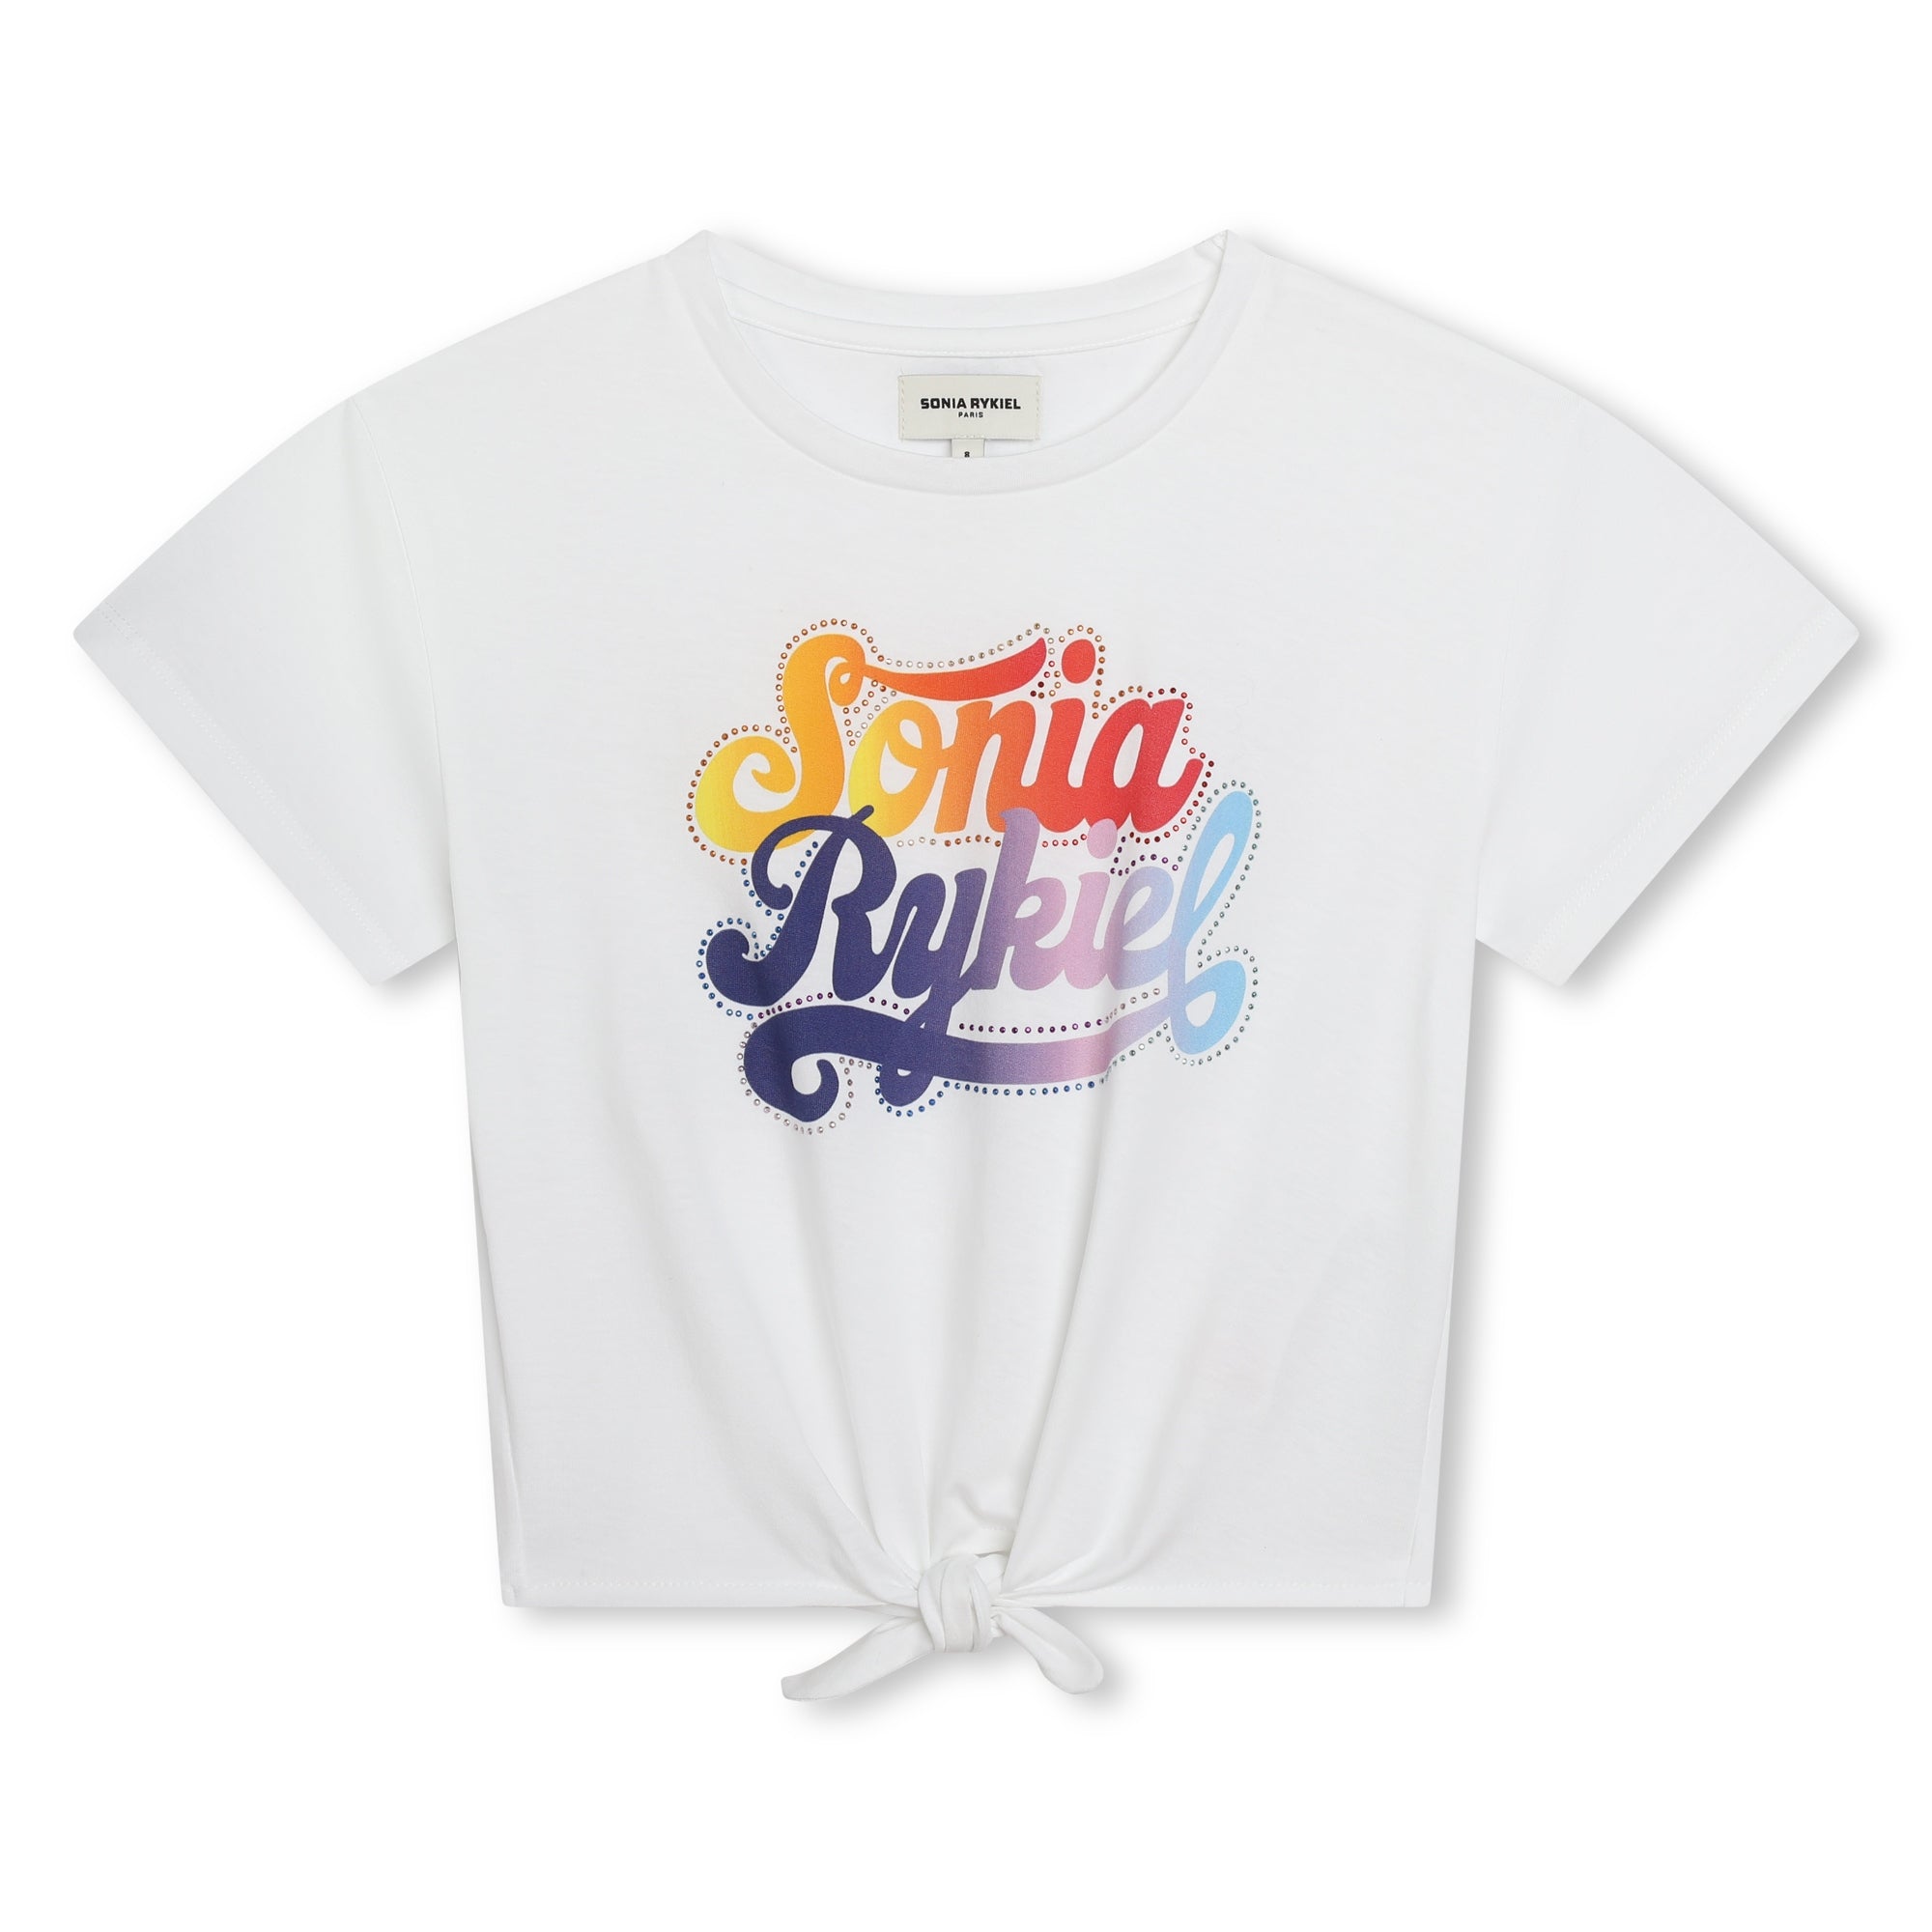 Sonia Rykiel White Logo Tee Shirt